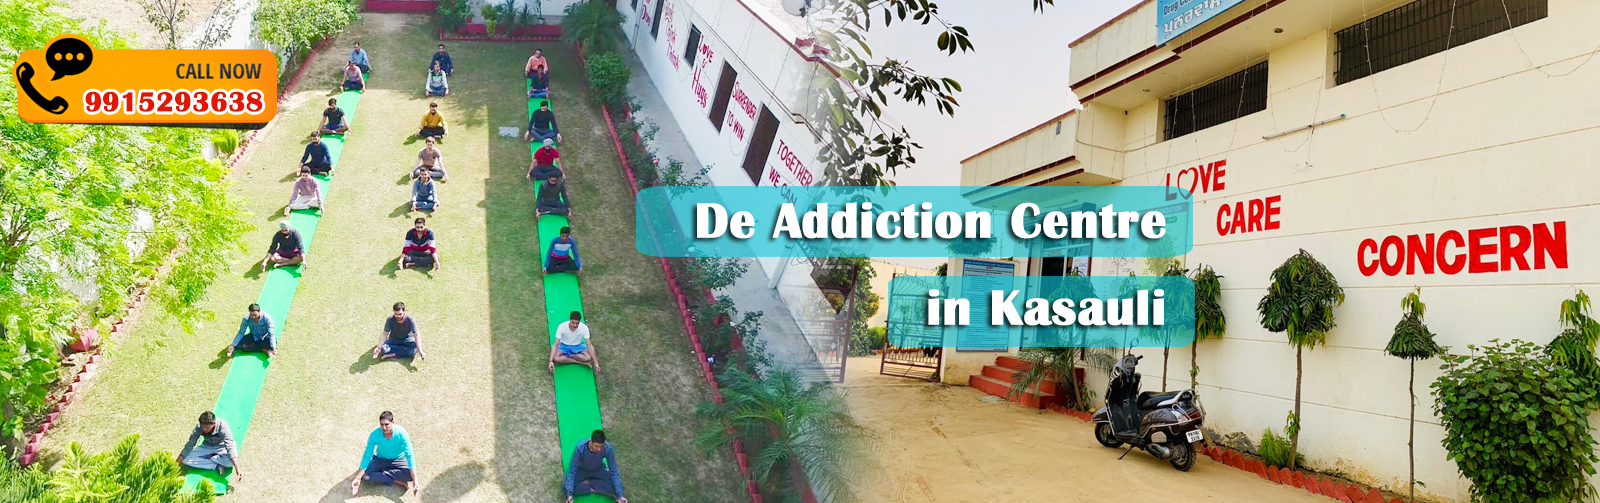 De Addiction Centre in Kasauli